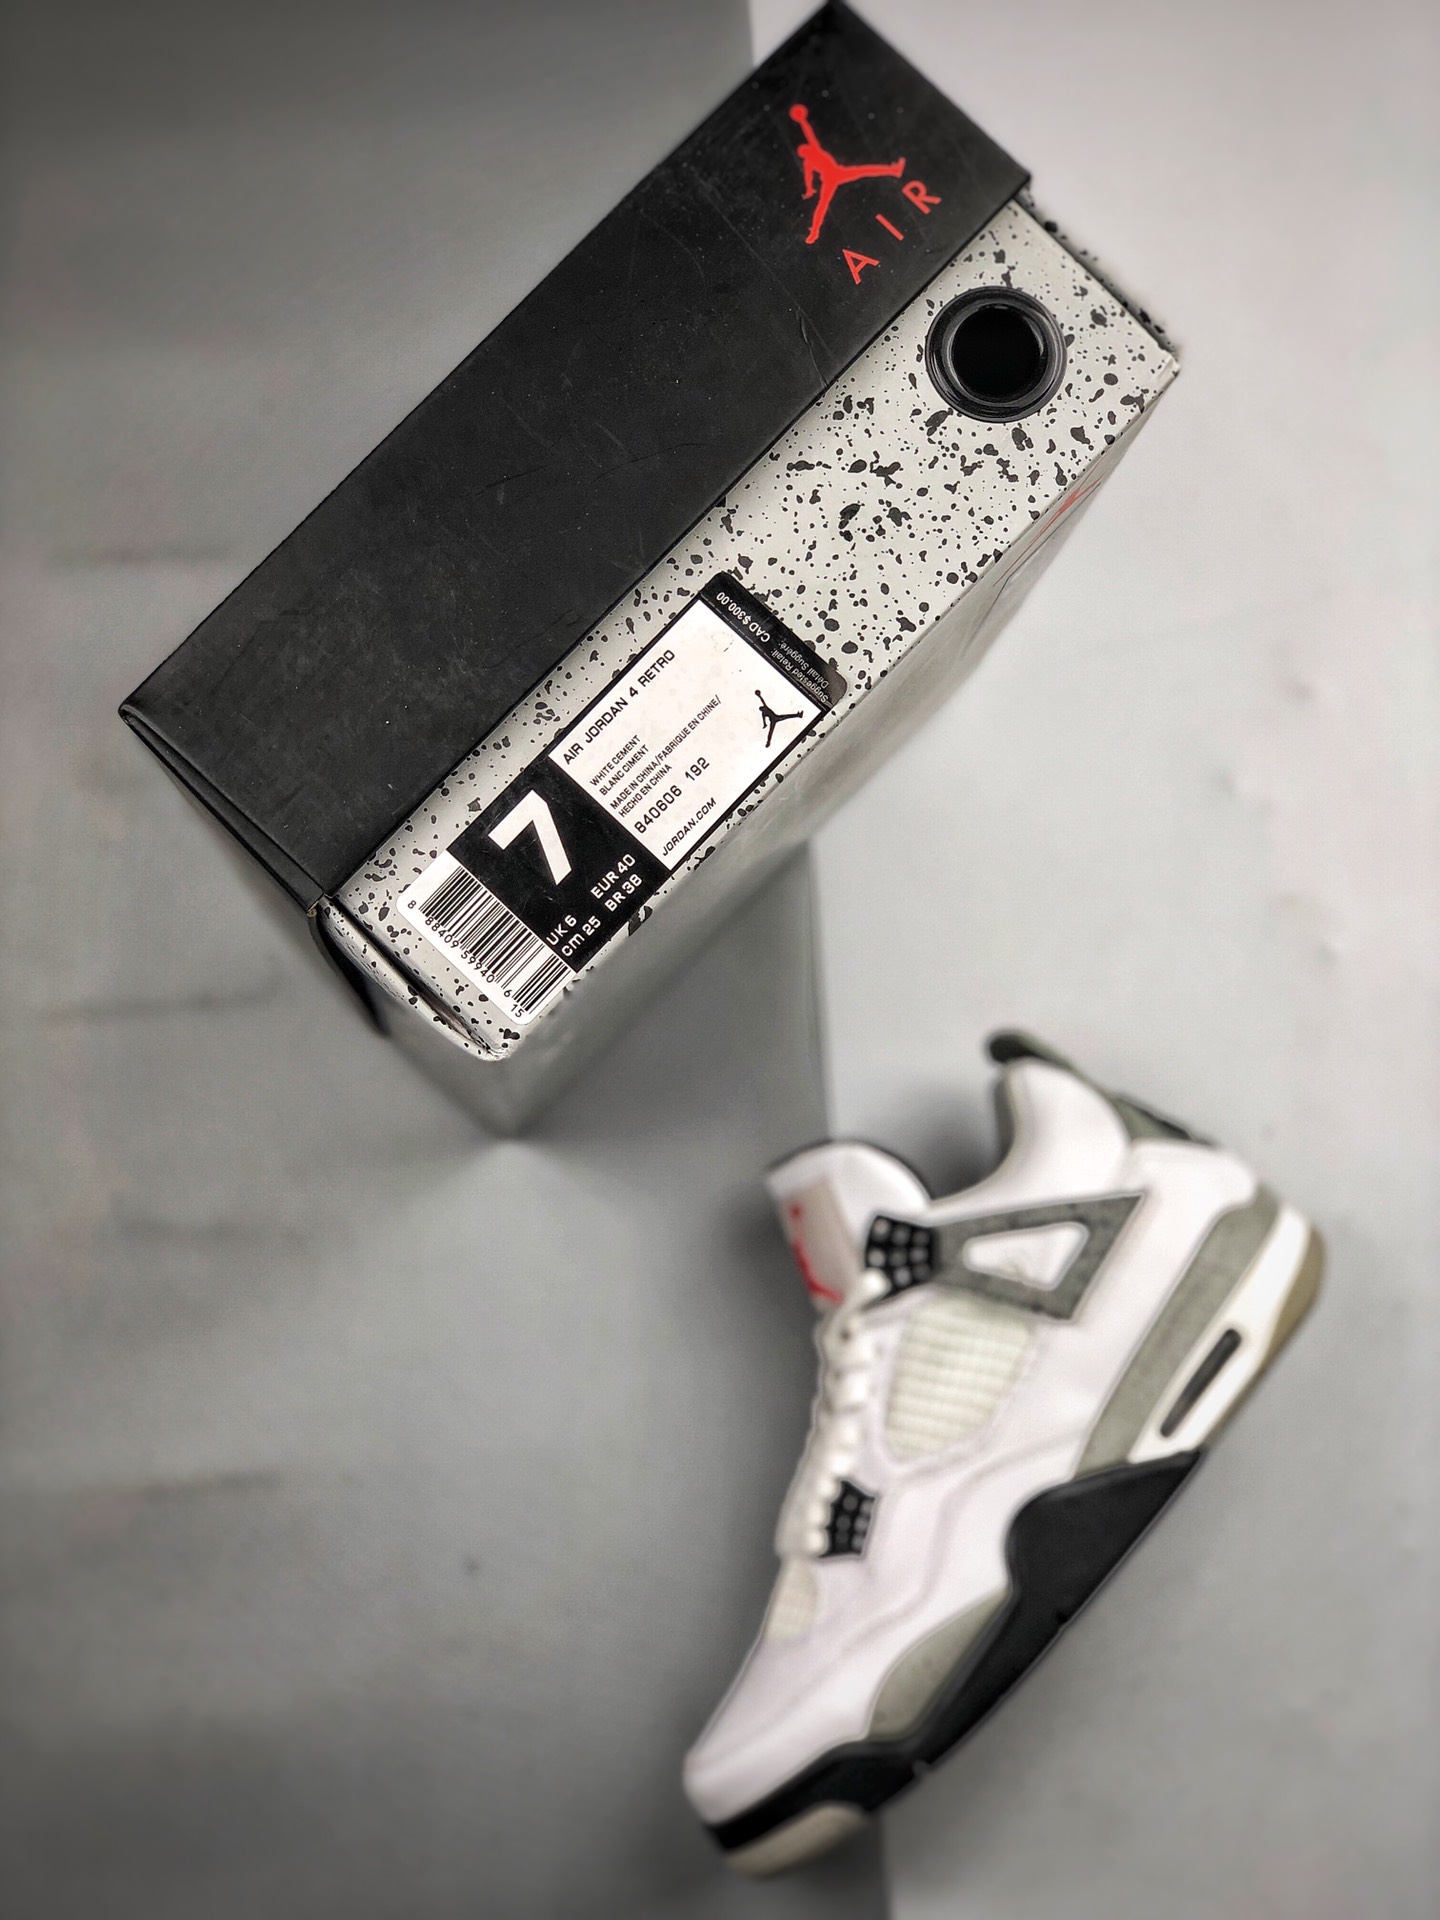 360 Air Jordan 4 Retro “White Cement” 白水泥2016年复刻版本-莆田高